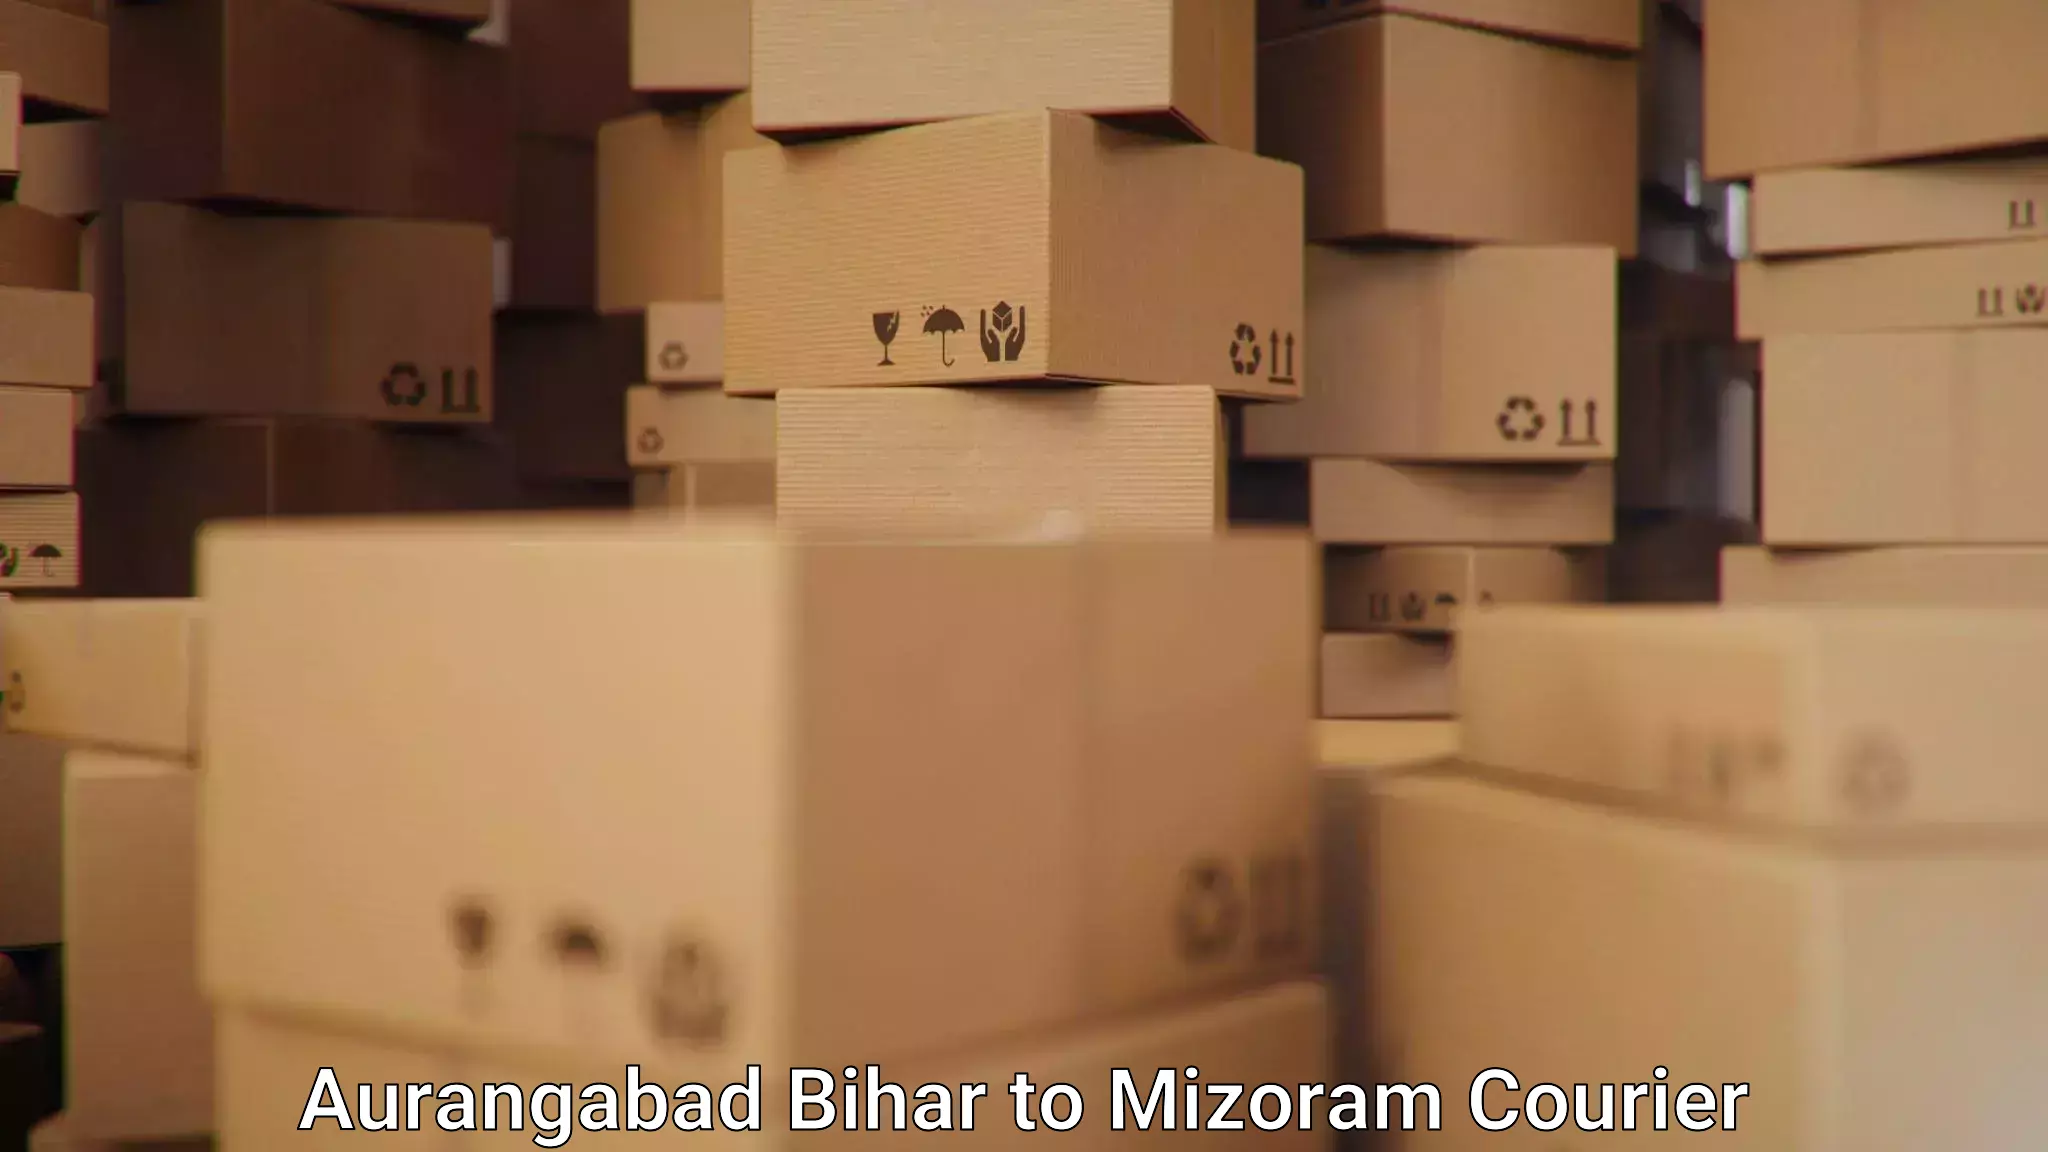 Courier service innovation Aurangabad Bihar to Saiha